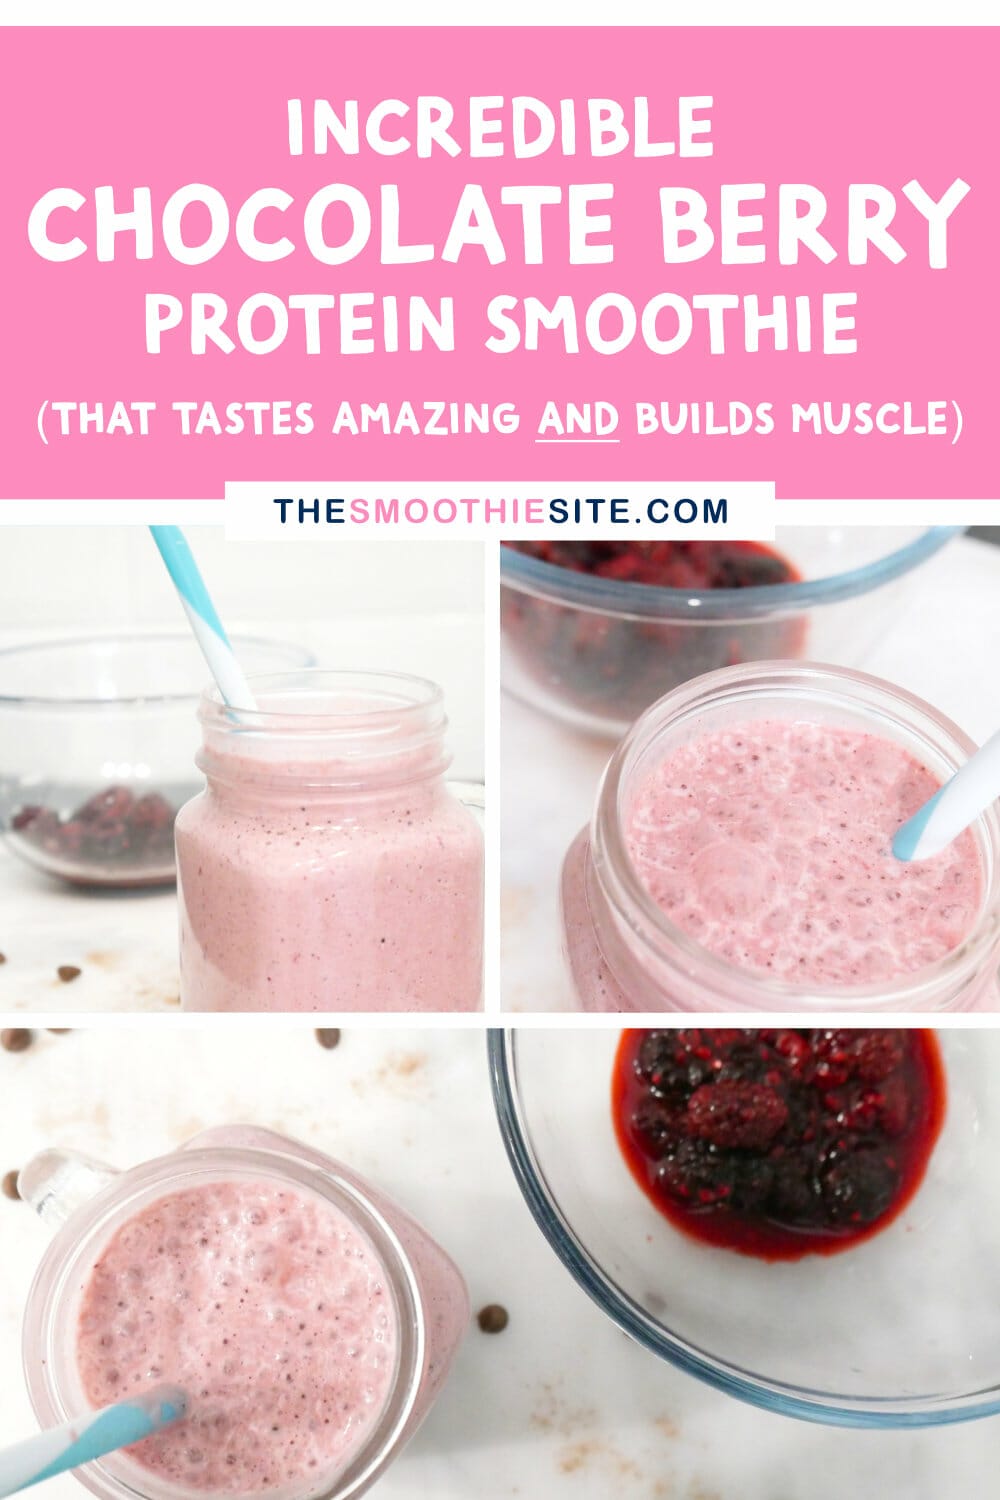 Chocolate protein berry weight gain smoothie recipe (Keto friendly!) via @thesmoothiesite